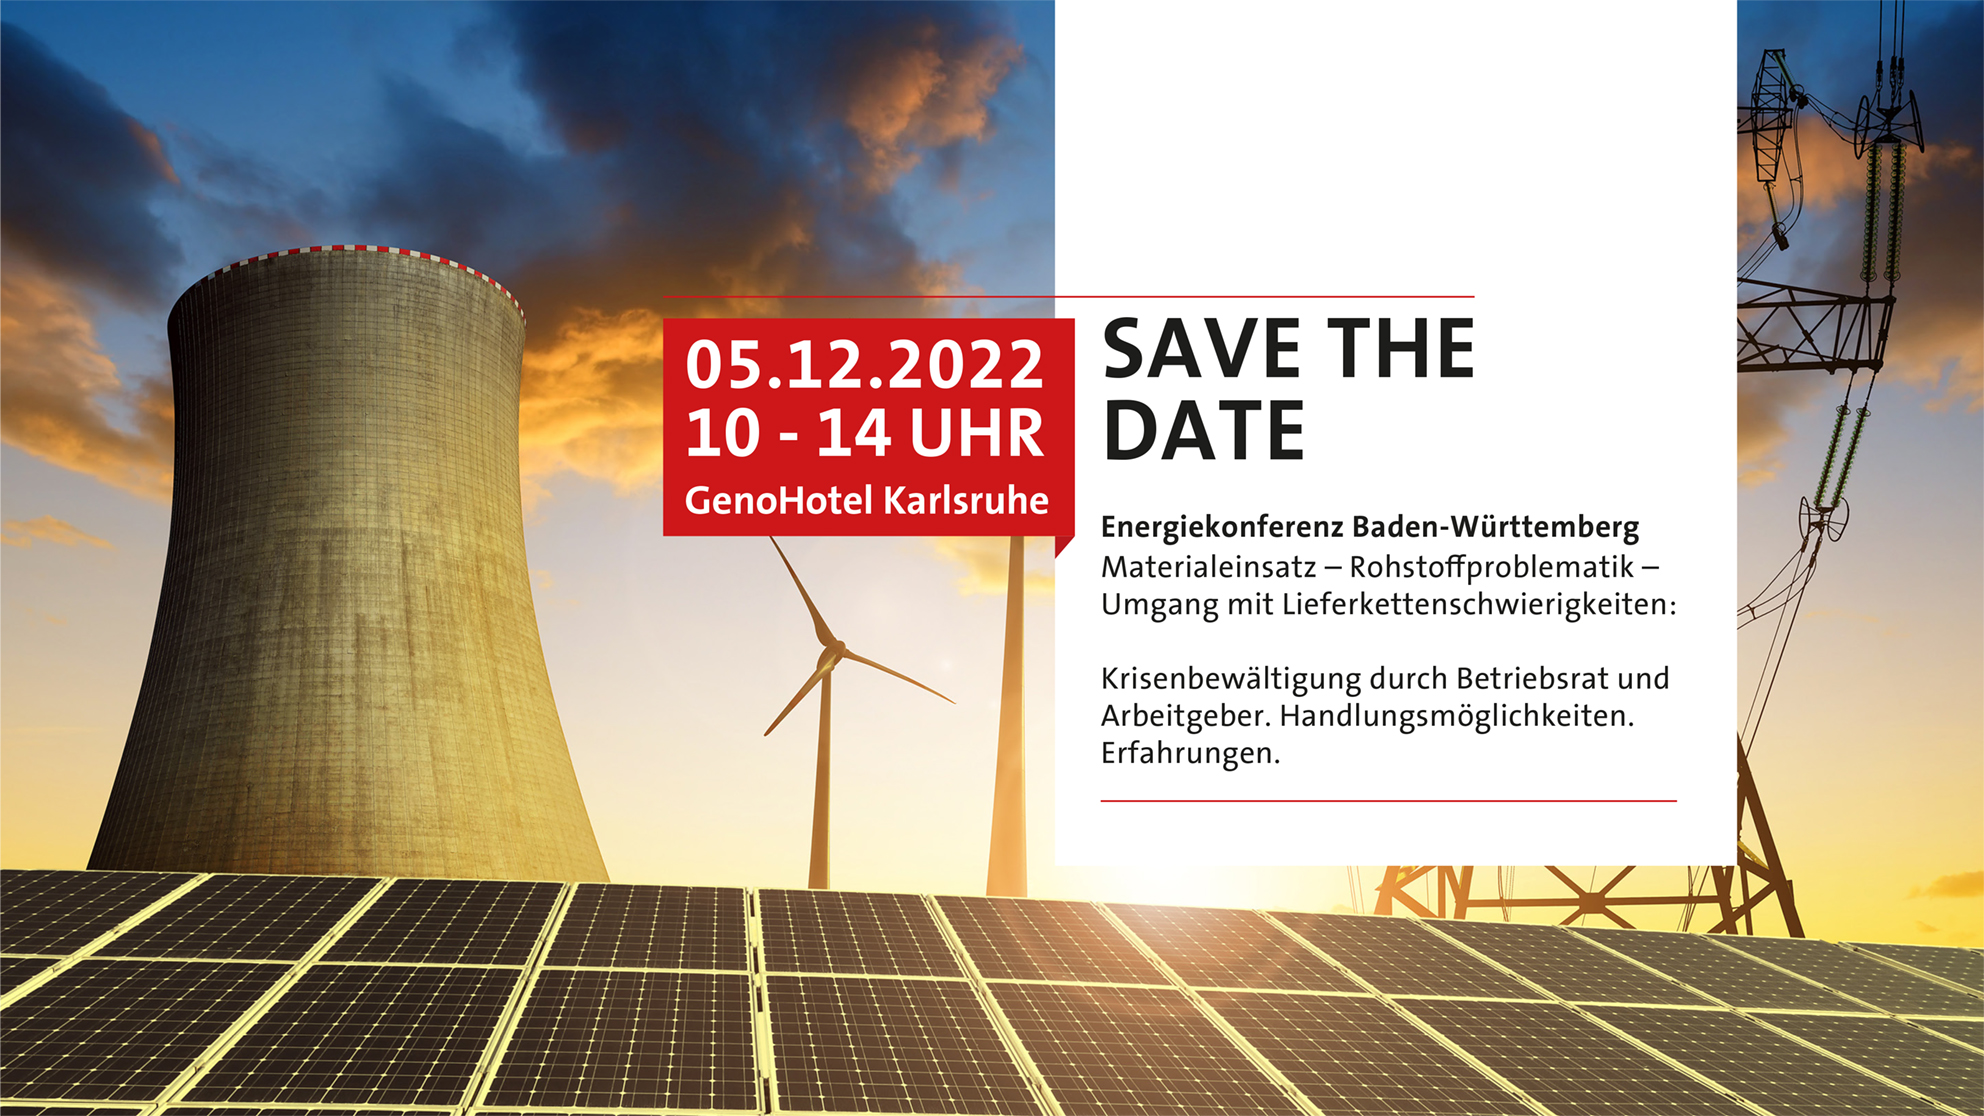 Energiekonferenz Baden-Württemberg - Save the Date